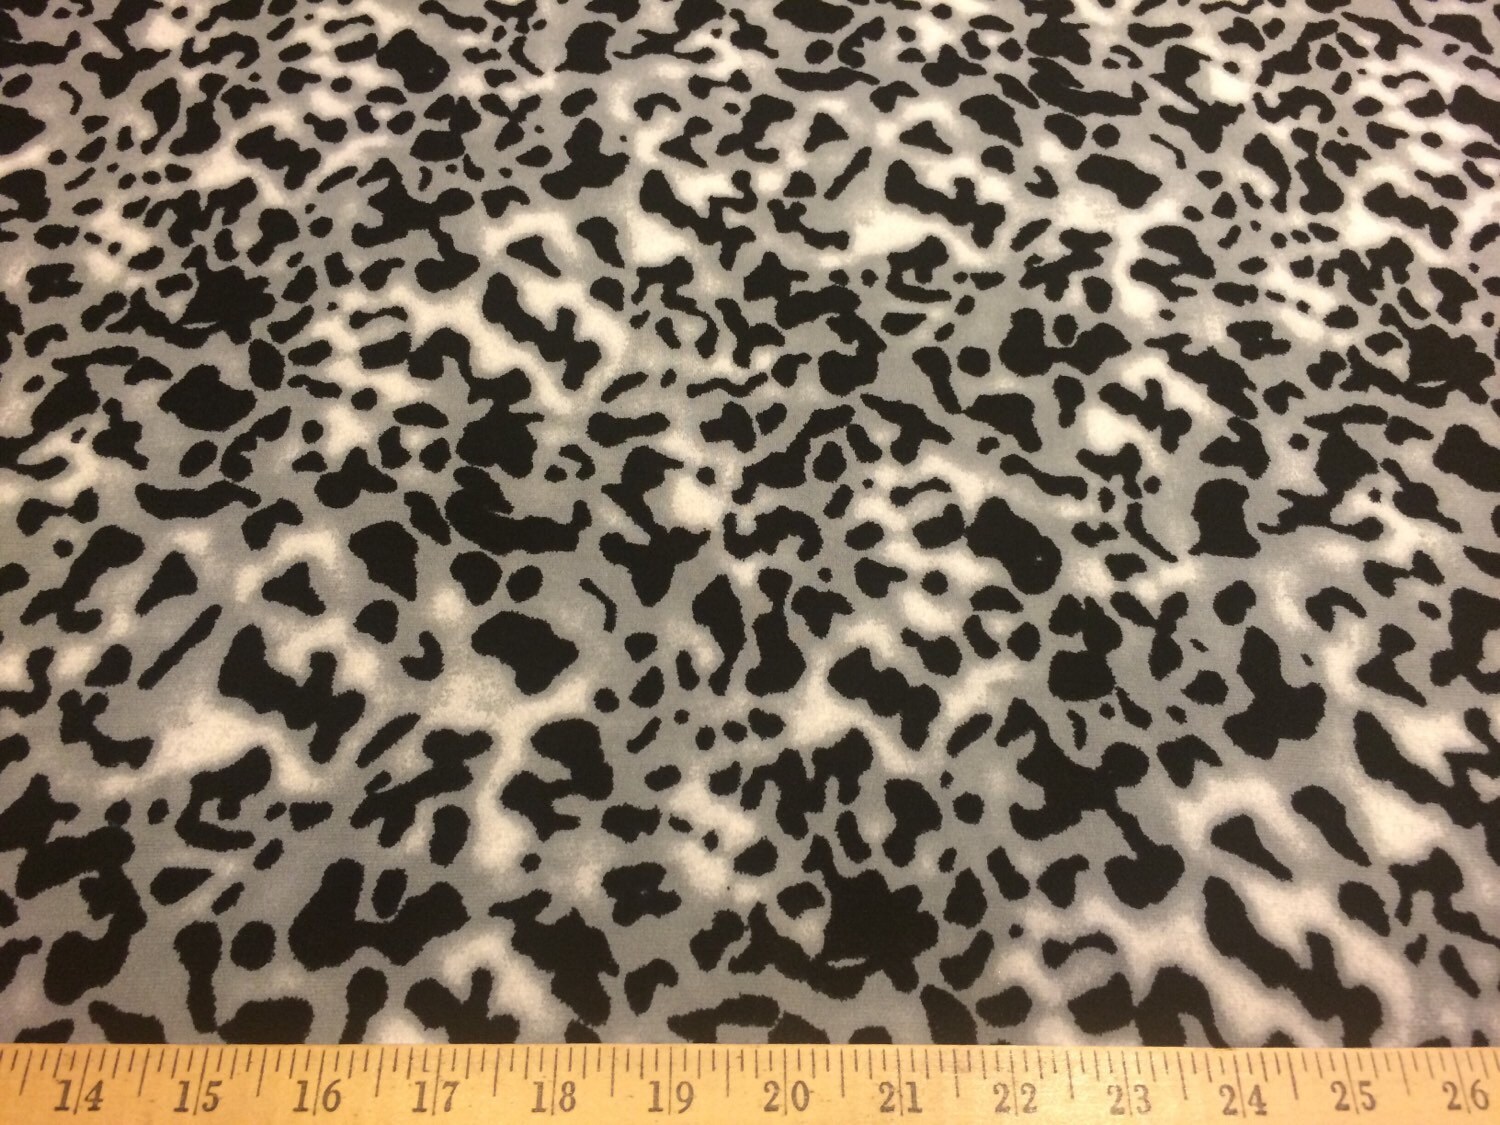 Black/White/Gray Leopard/Cheetah animal print 2 way stretch